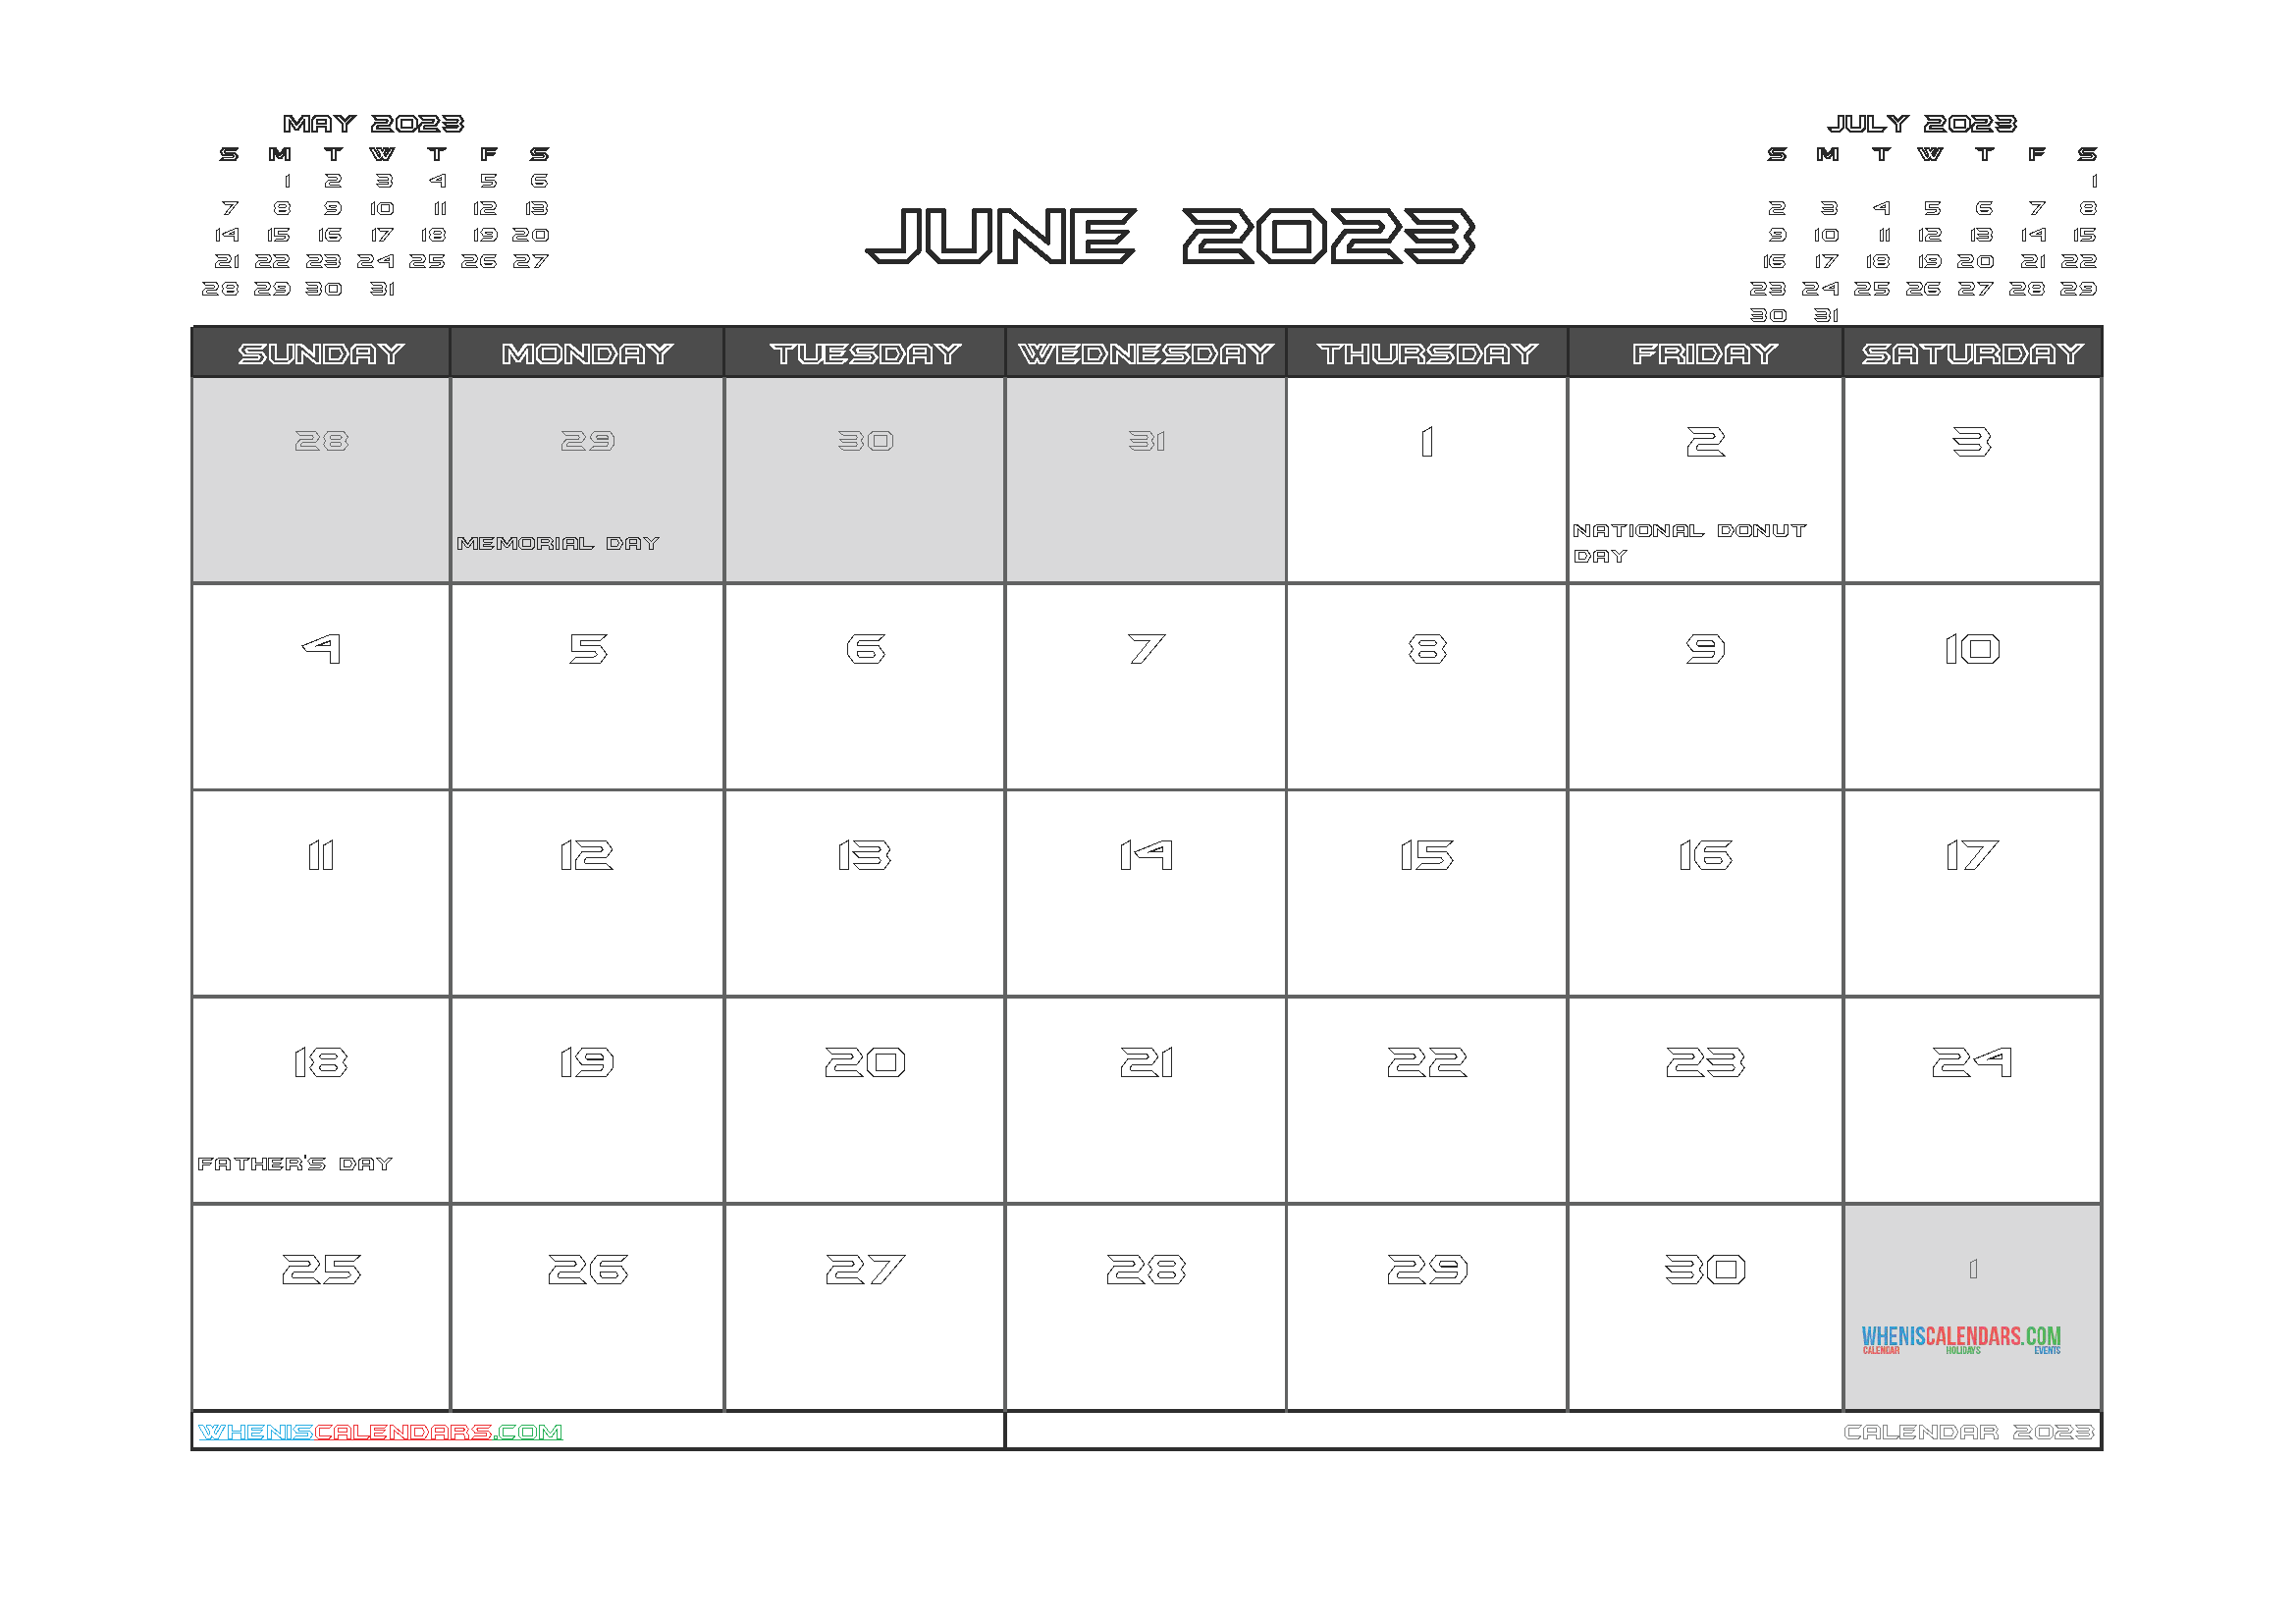 Free Editable Calendar June 2023 PDF